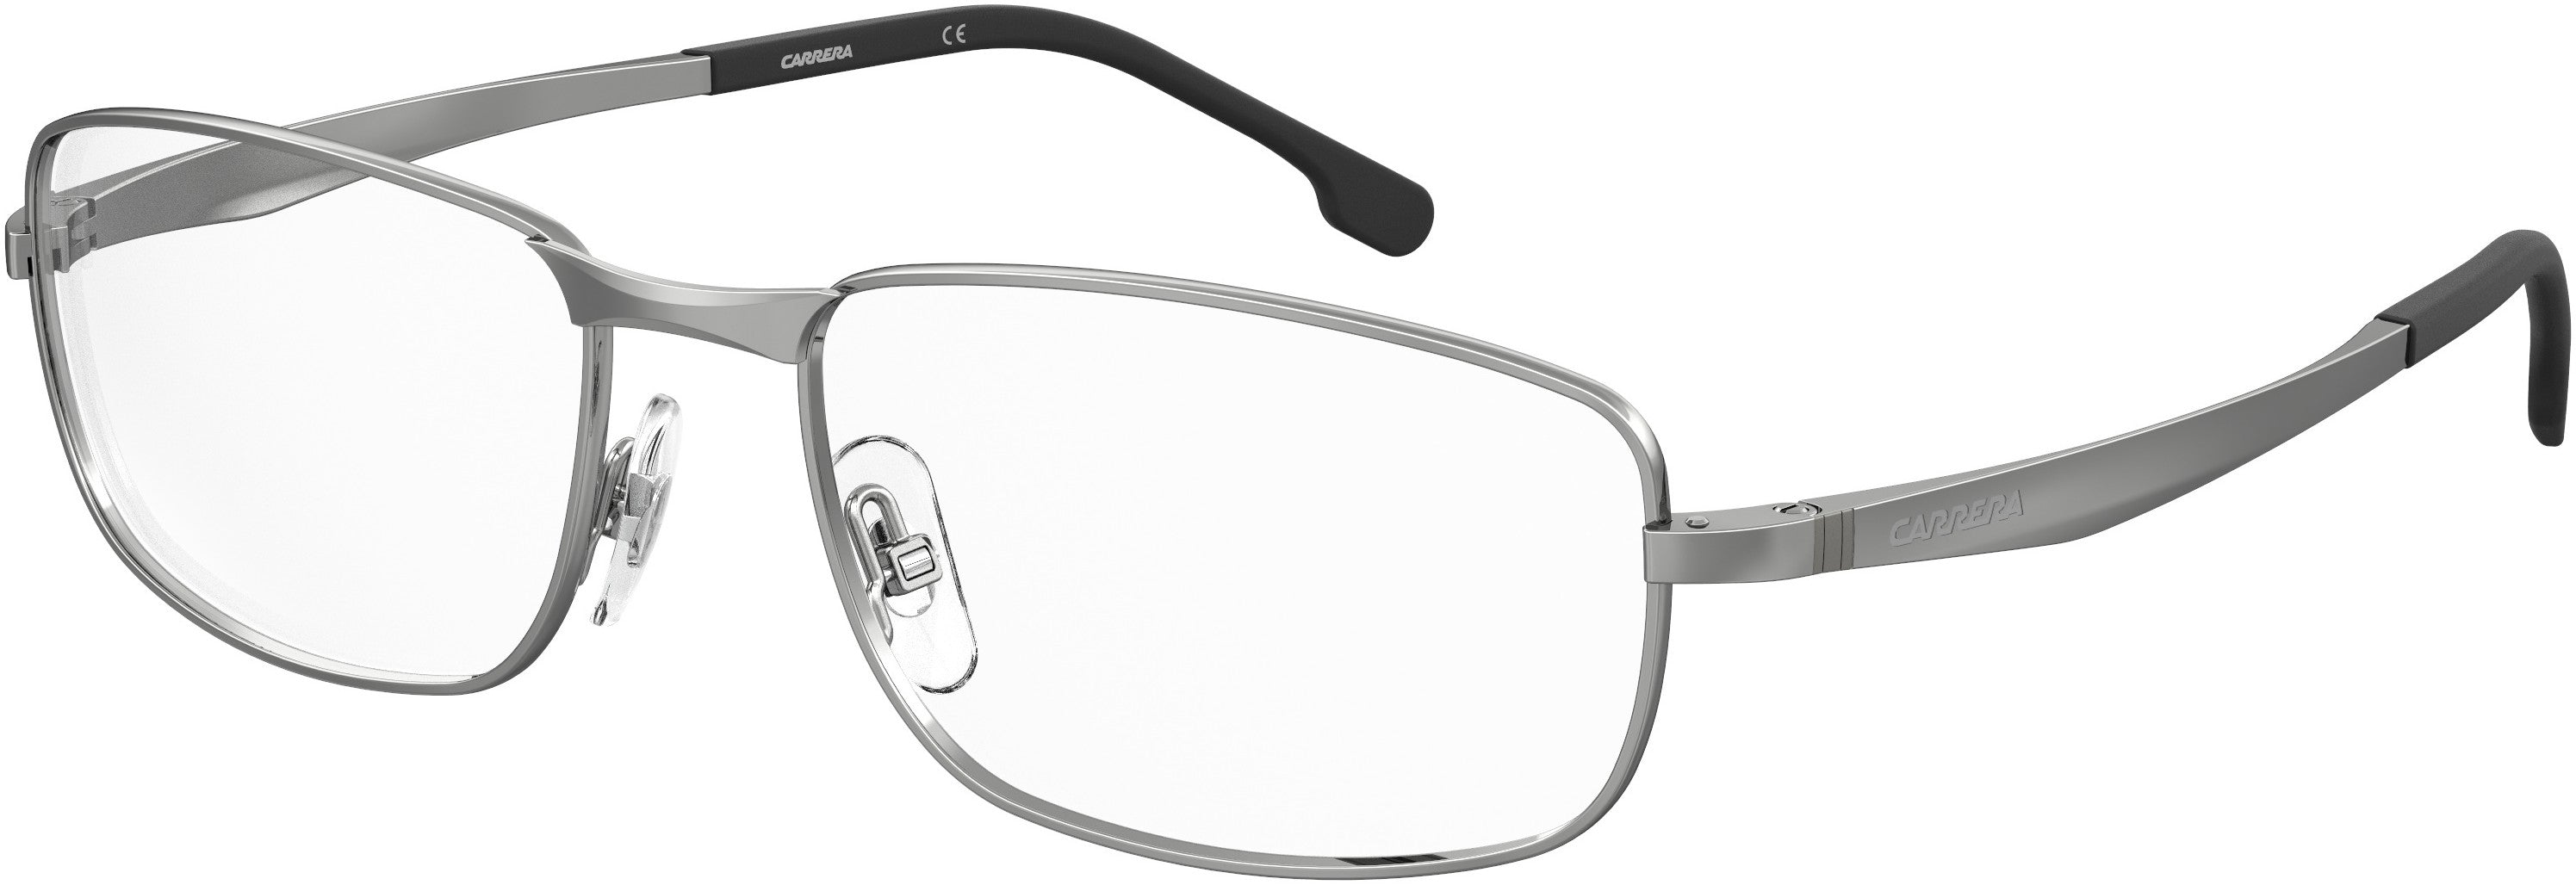  Carrera 8854 Rectangular Eyeglasses 0KJ1-0KJ1  Dark Ruthenium (00 Demo Lens)